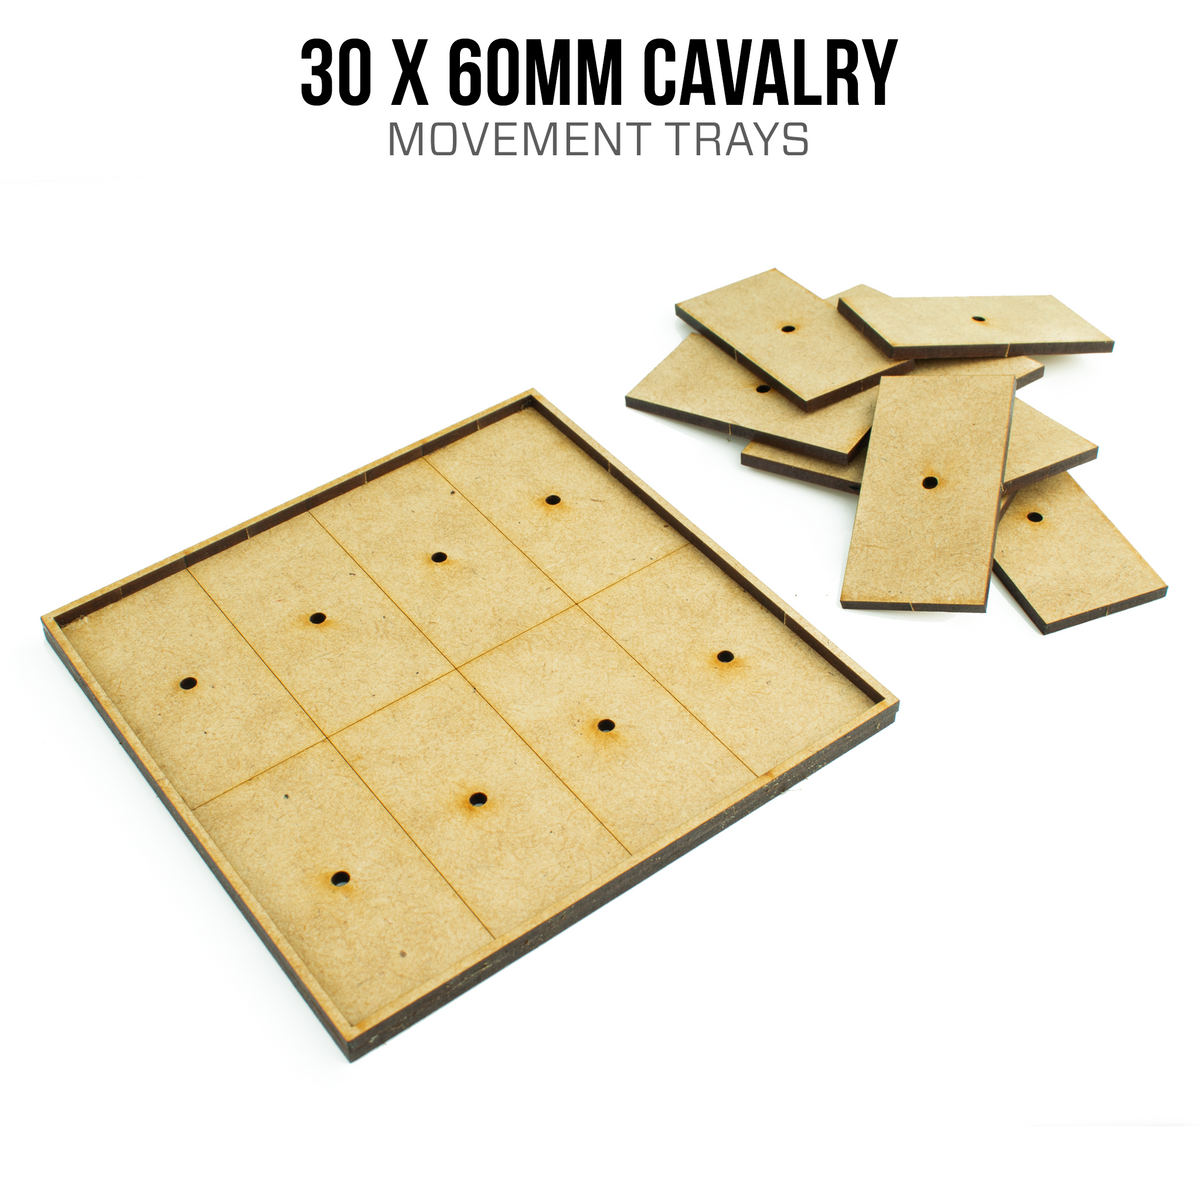 30mm x 60mm Cavalry Movement Trays